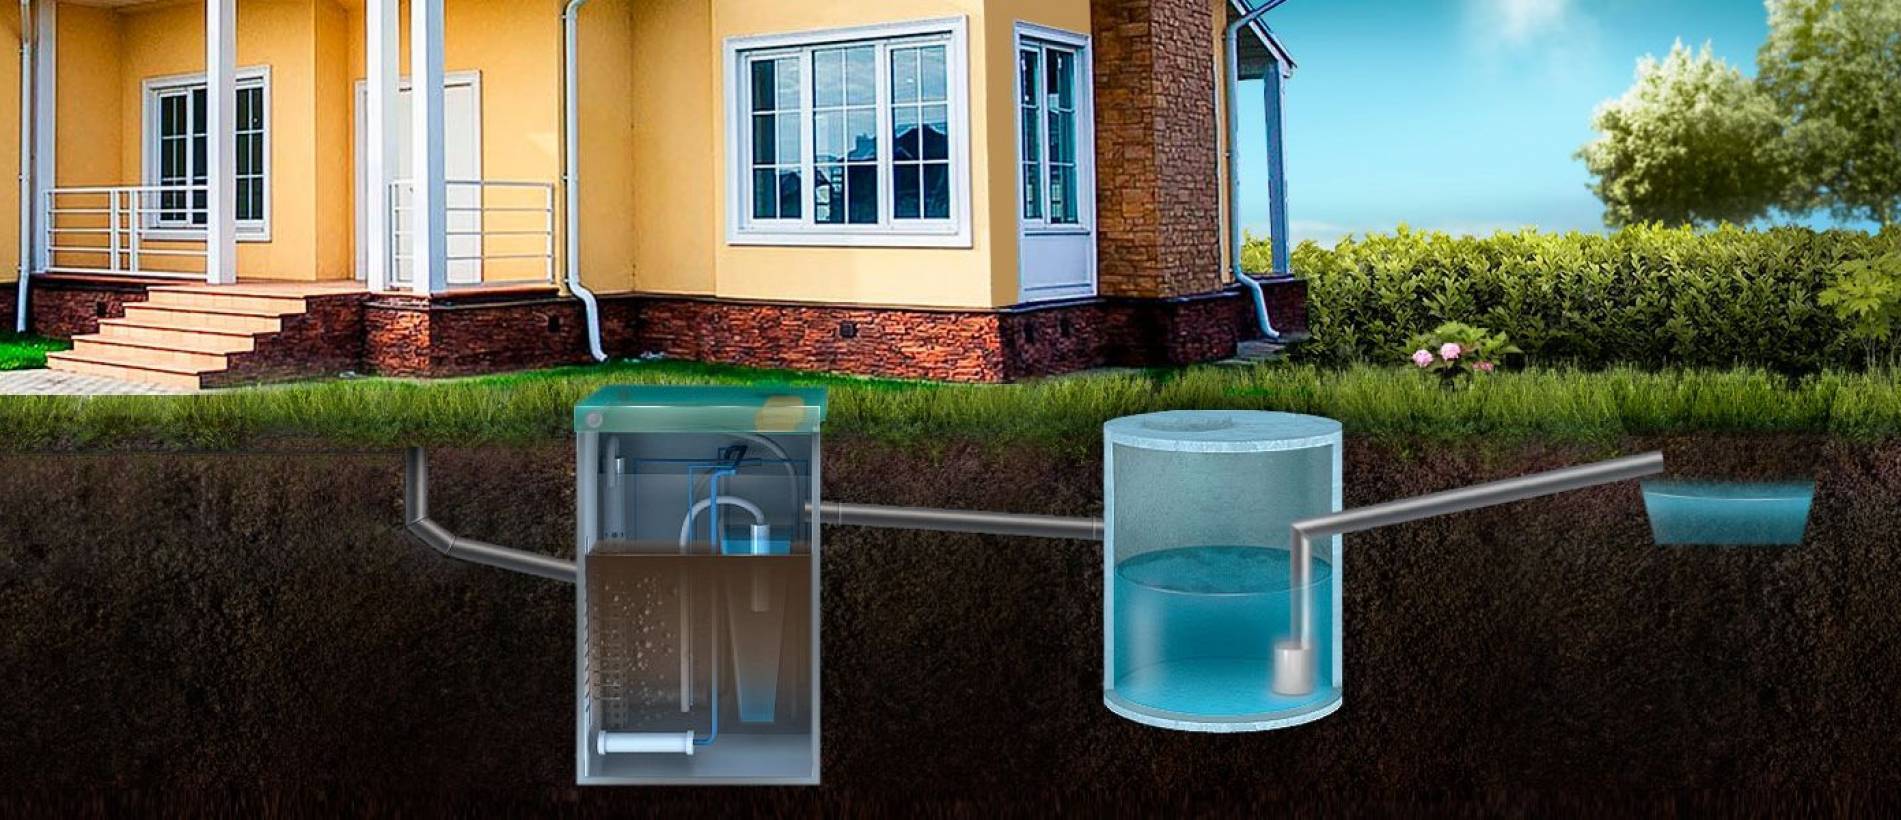 Автономная канализация на даче простая канализация на даче своими руками, простейшая система на фото и видео